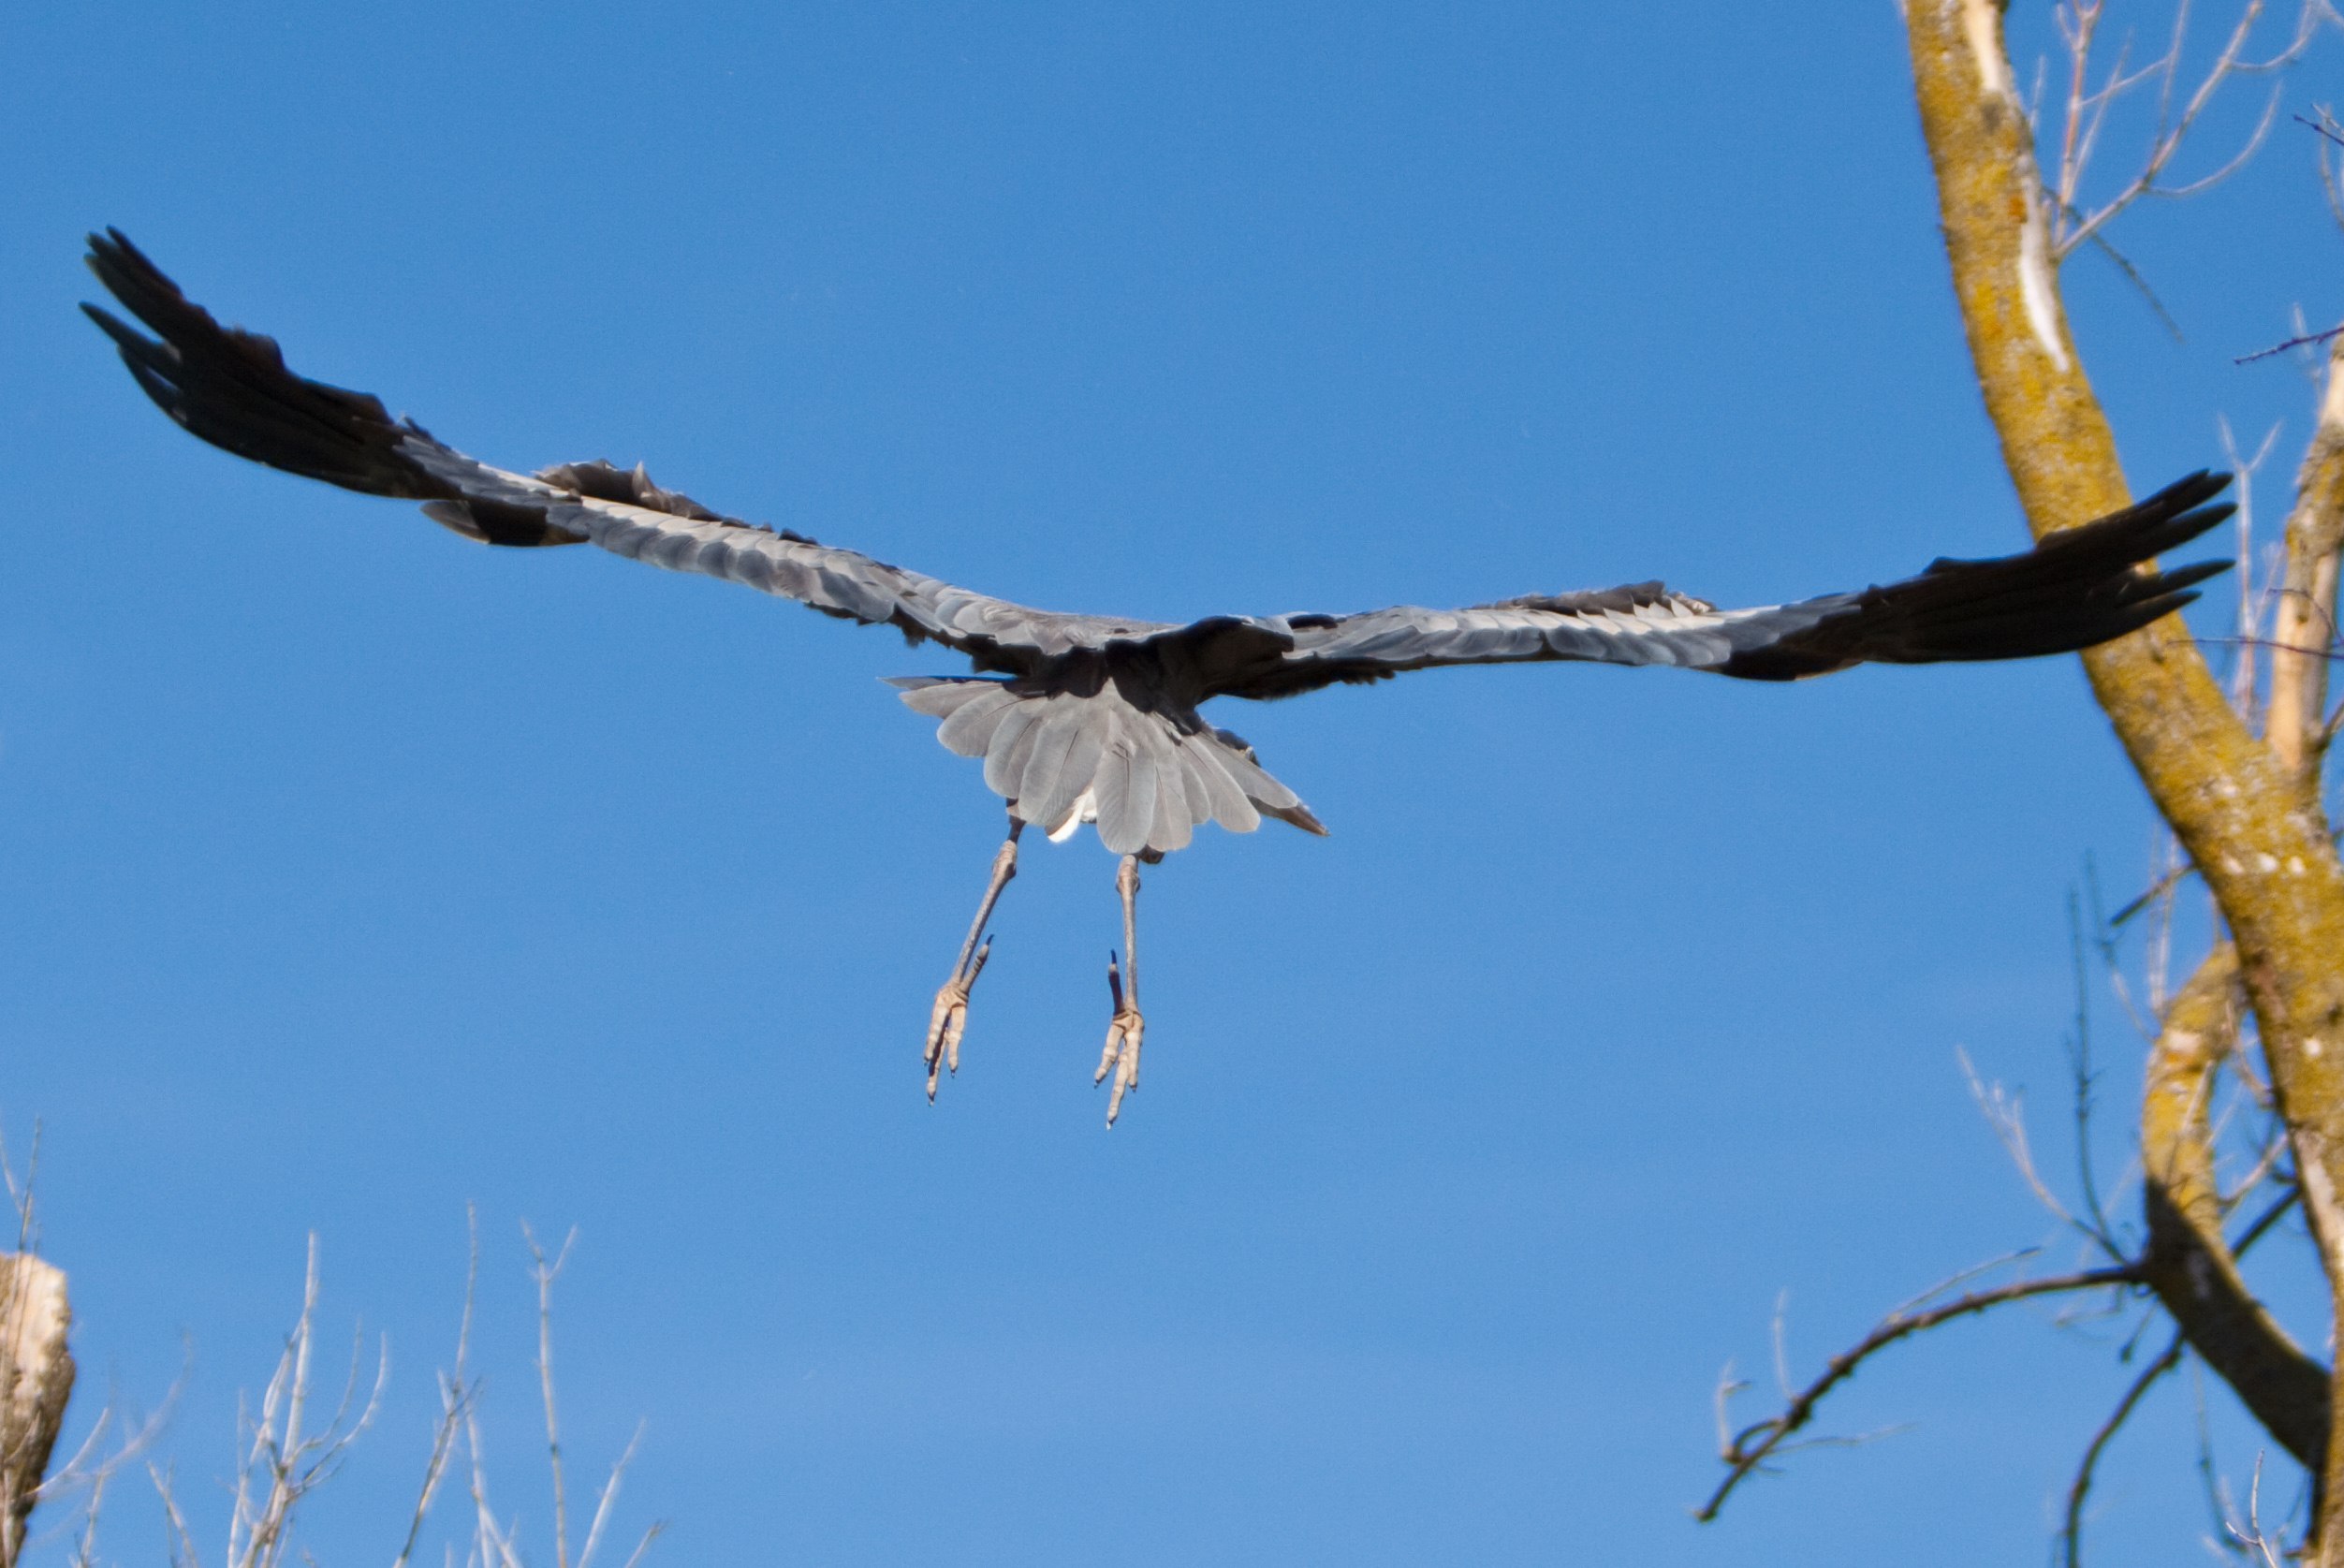 Fall bird. Падающая птица. Падение птицы. Крылья падающей птицы. Птицы Канады фото.